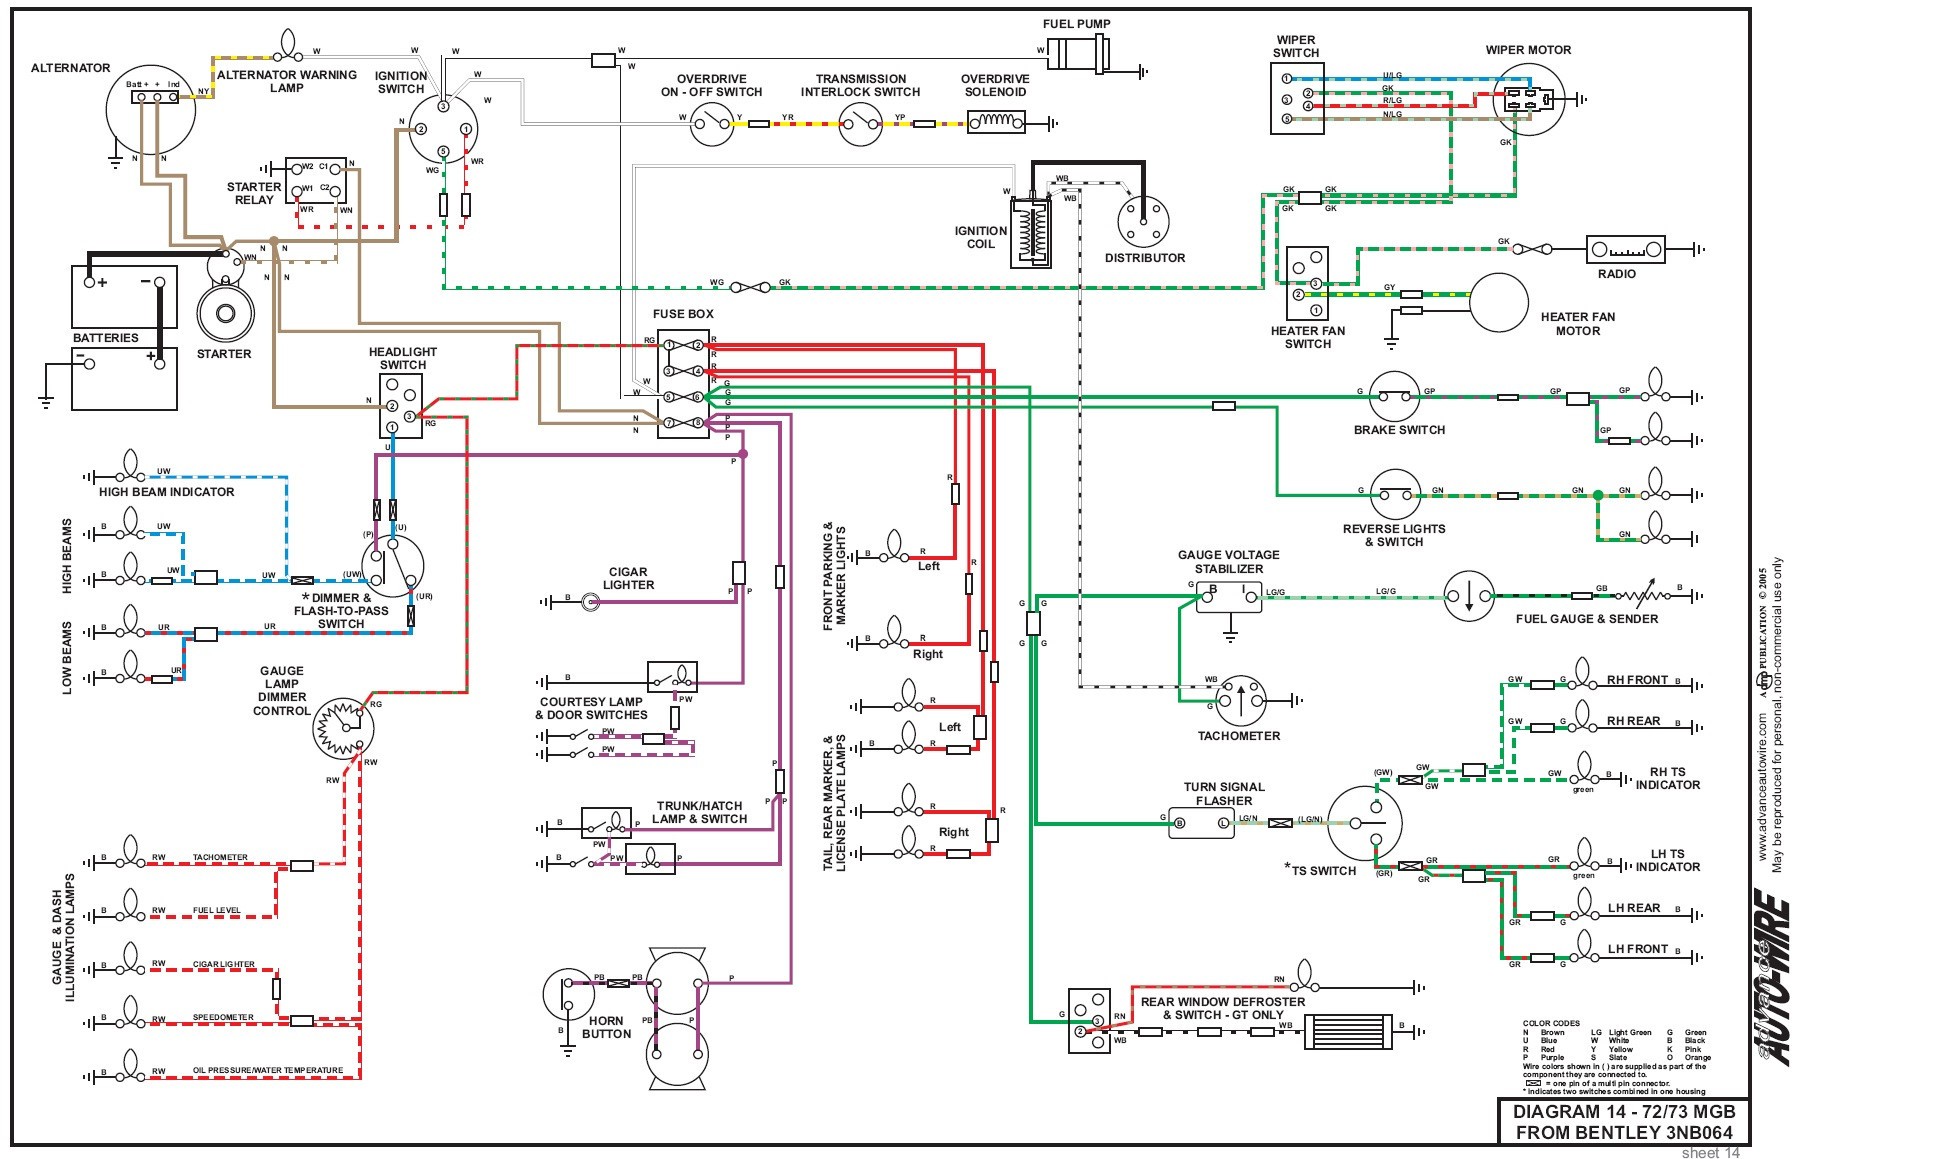 mgb gt wiring diagram - Wiring Diagram